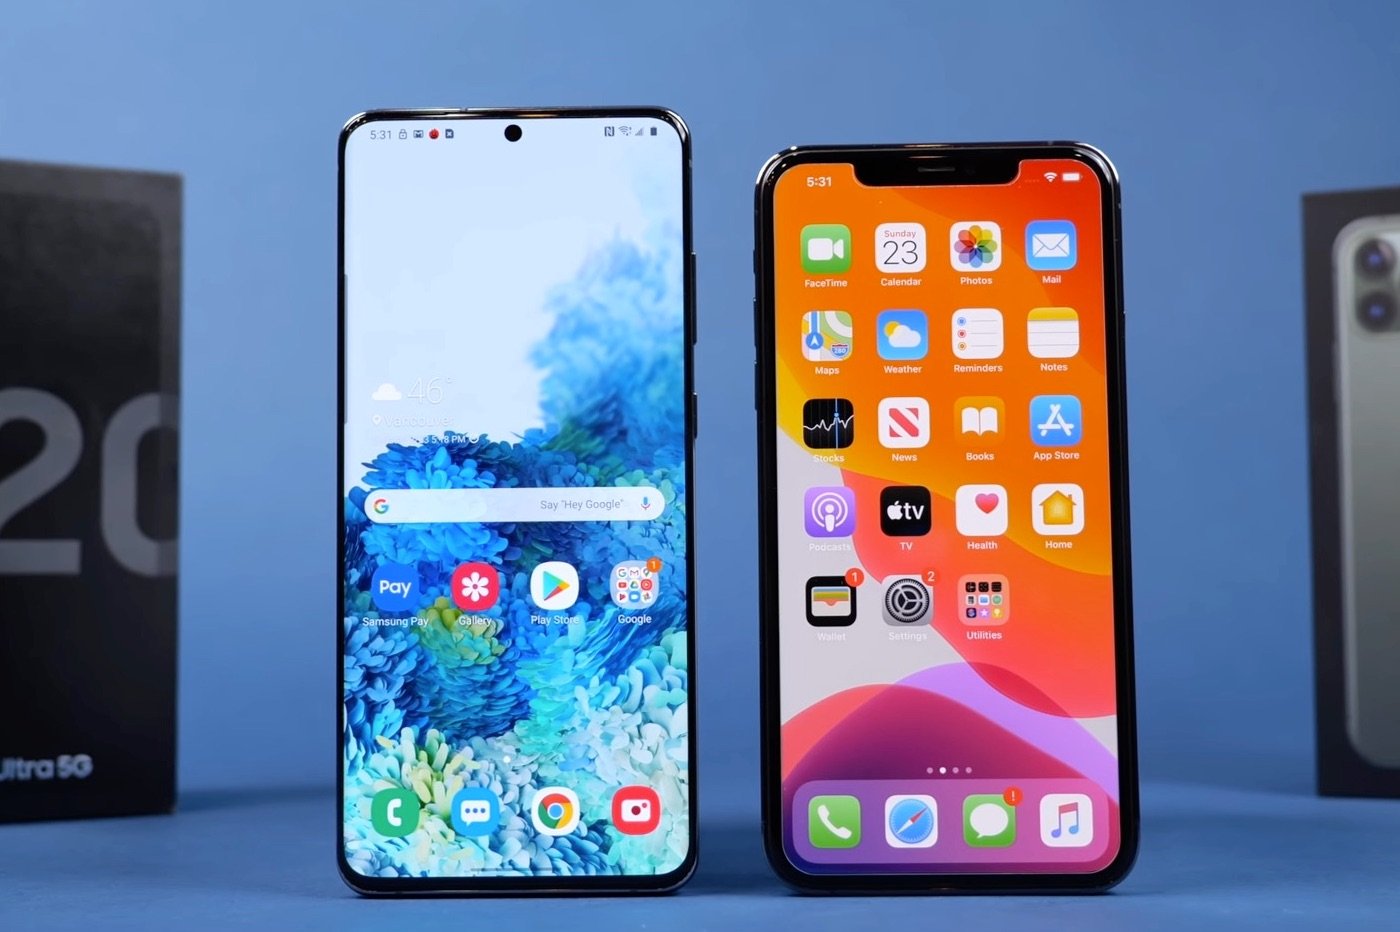 Duel Galaxy S20 Ultra vs iPhone 11 Pro Max